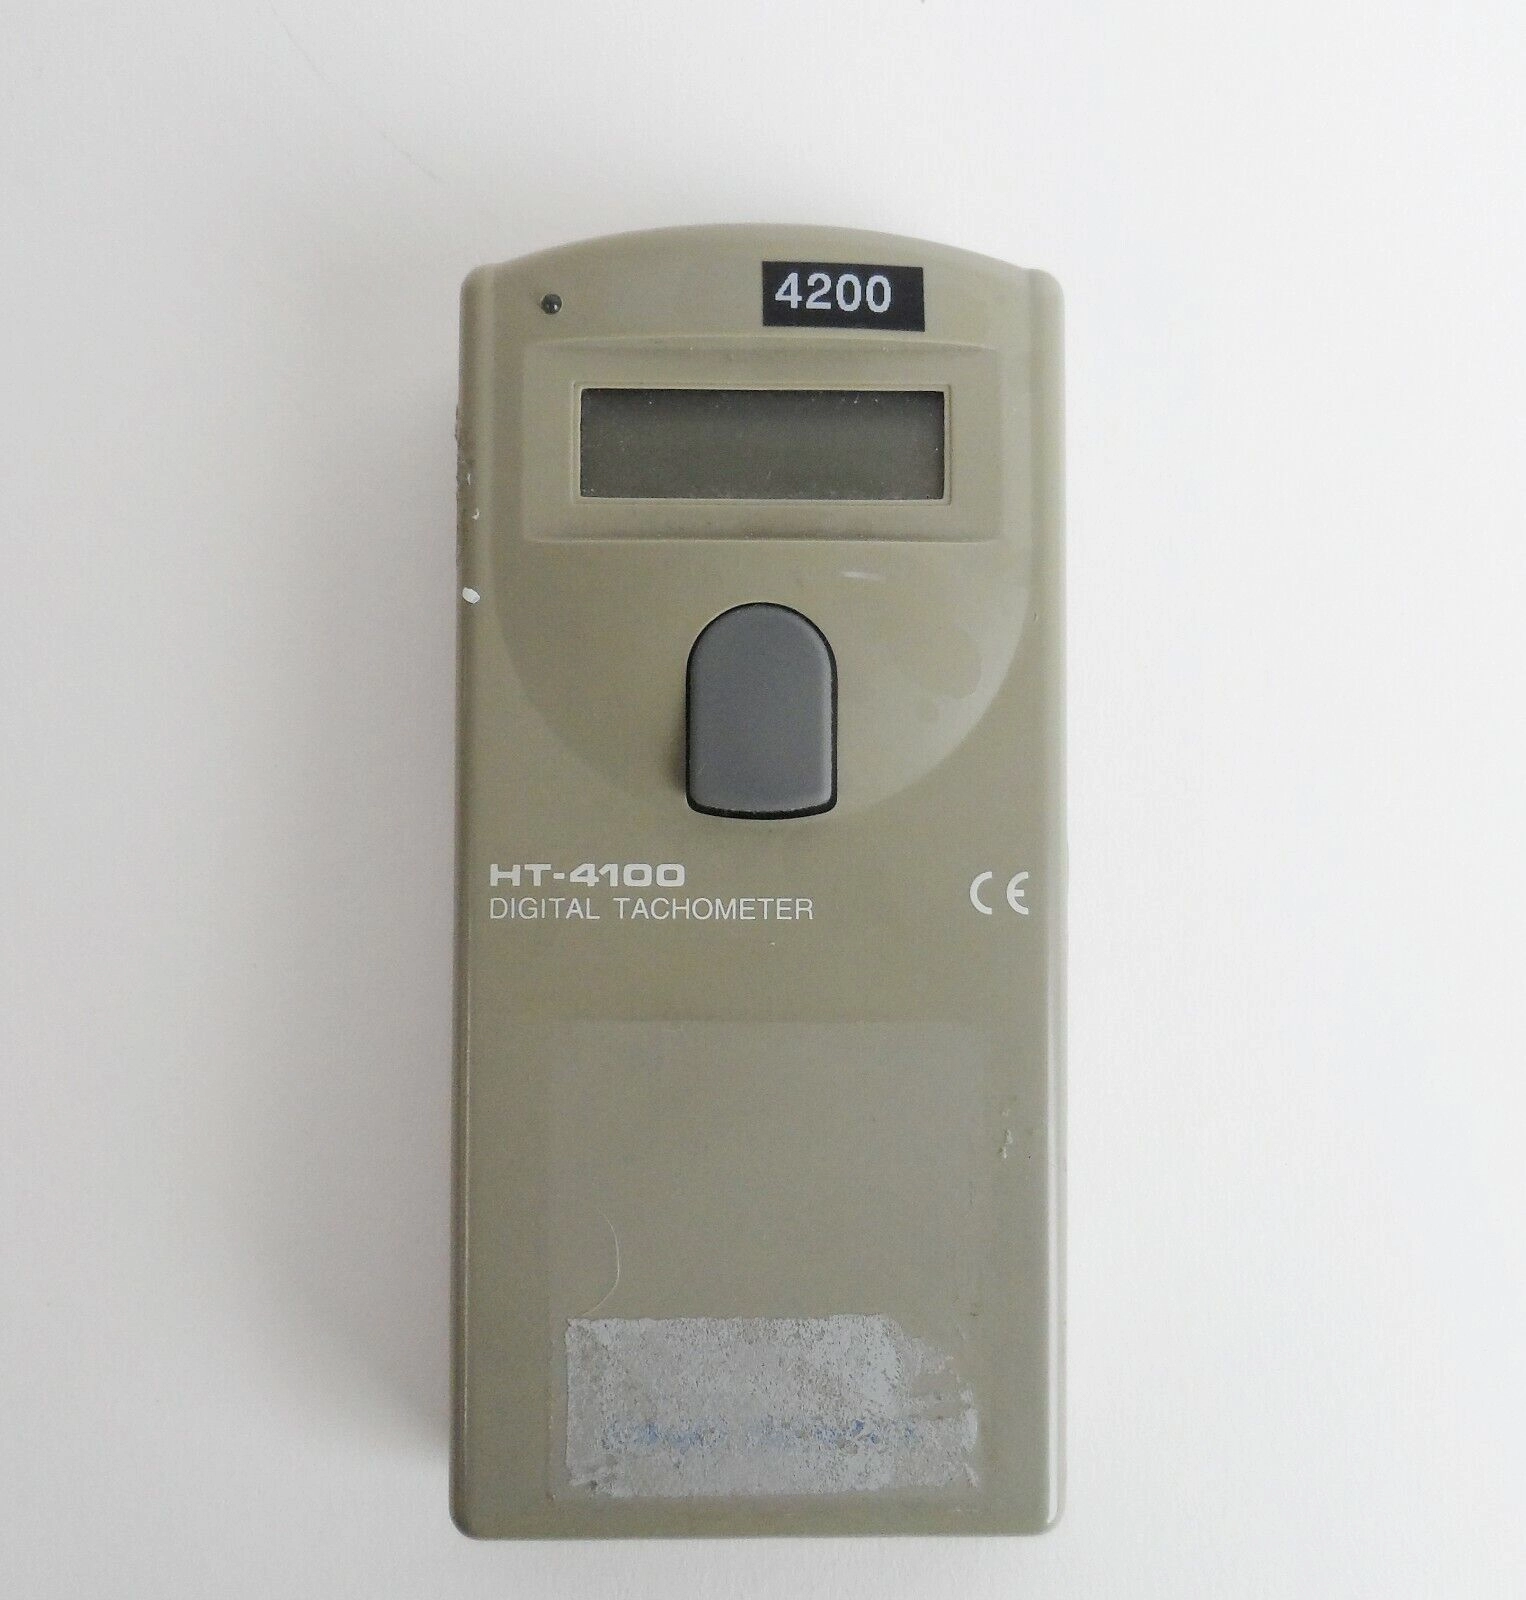 Ono Sokki HT-4100 Digital Tachometer